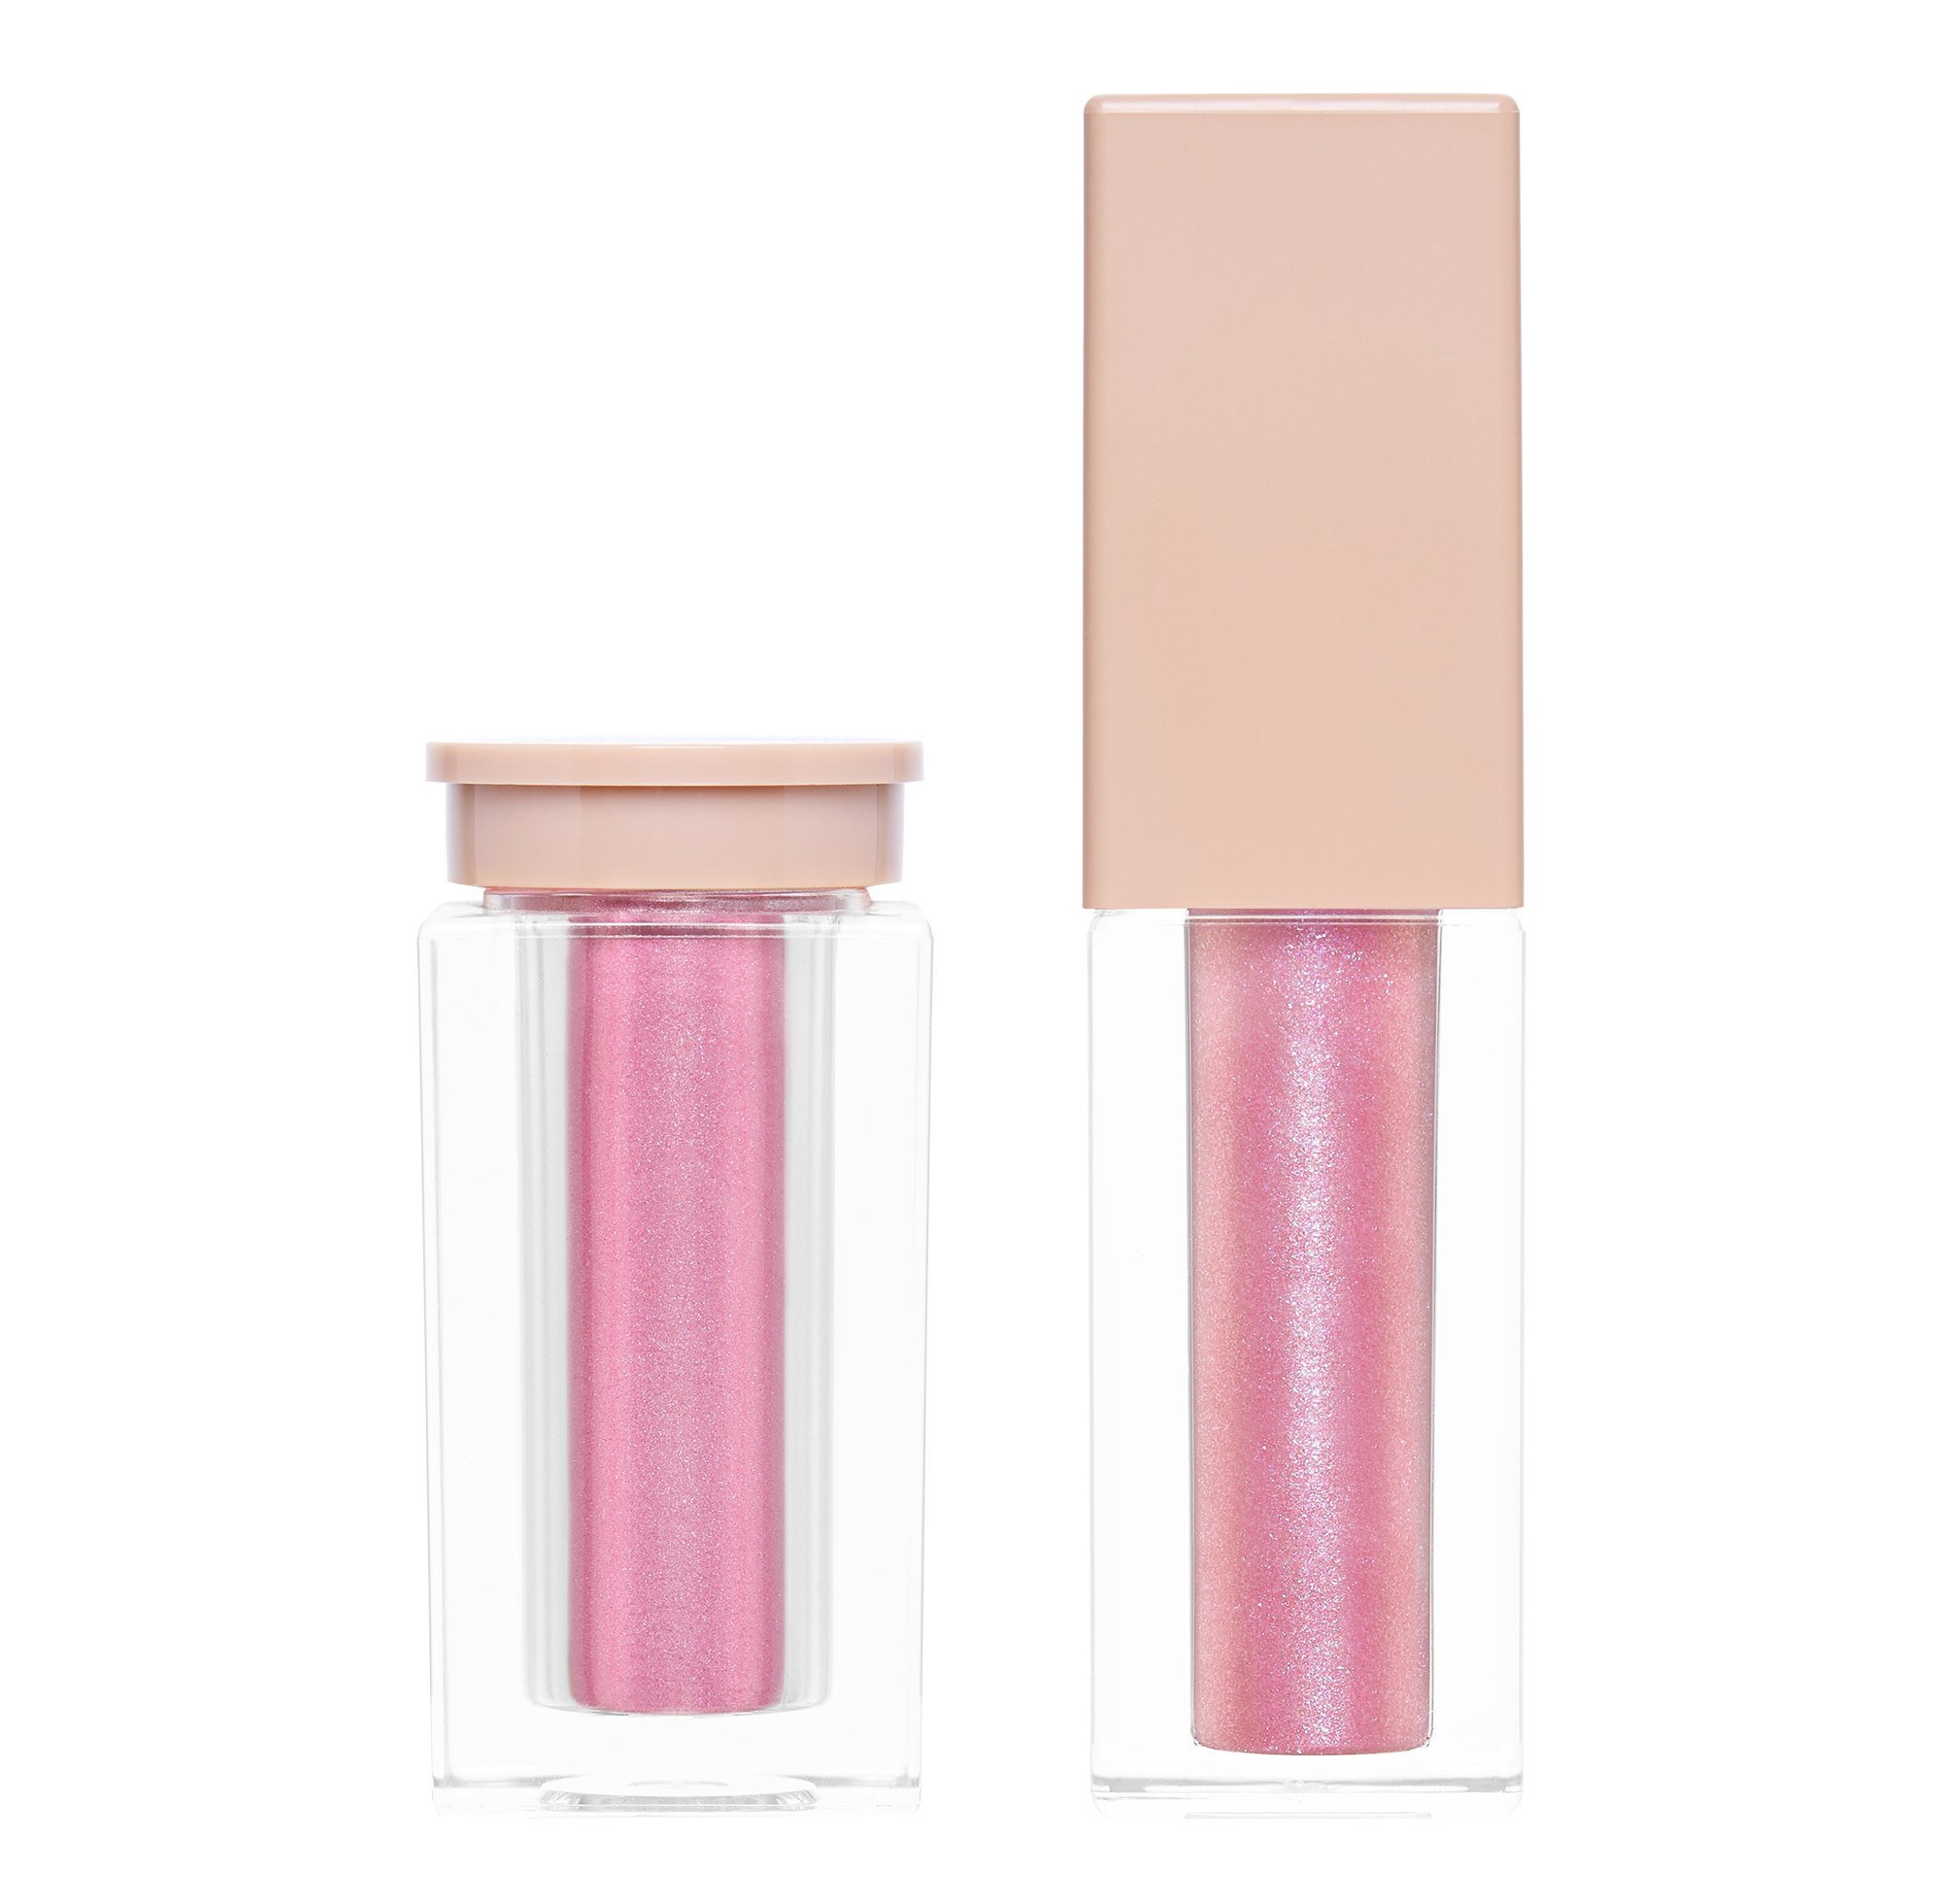 KKW-Beauty-Ultra-Light-Beam-Duo-Pink